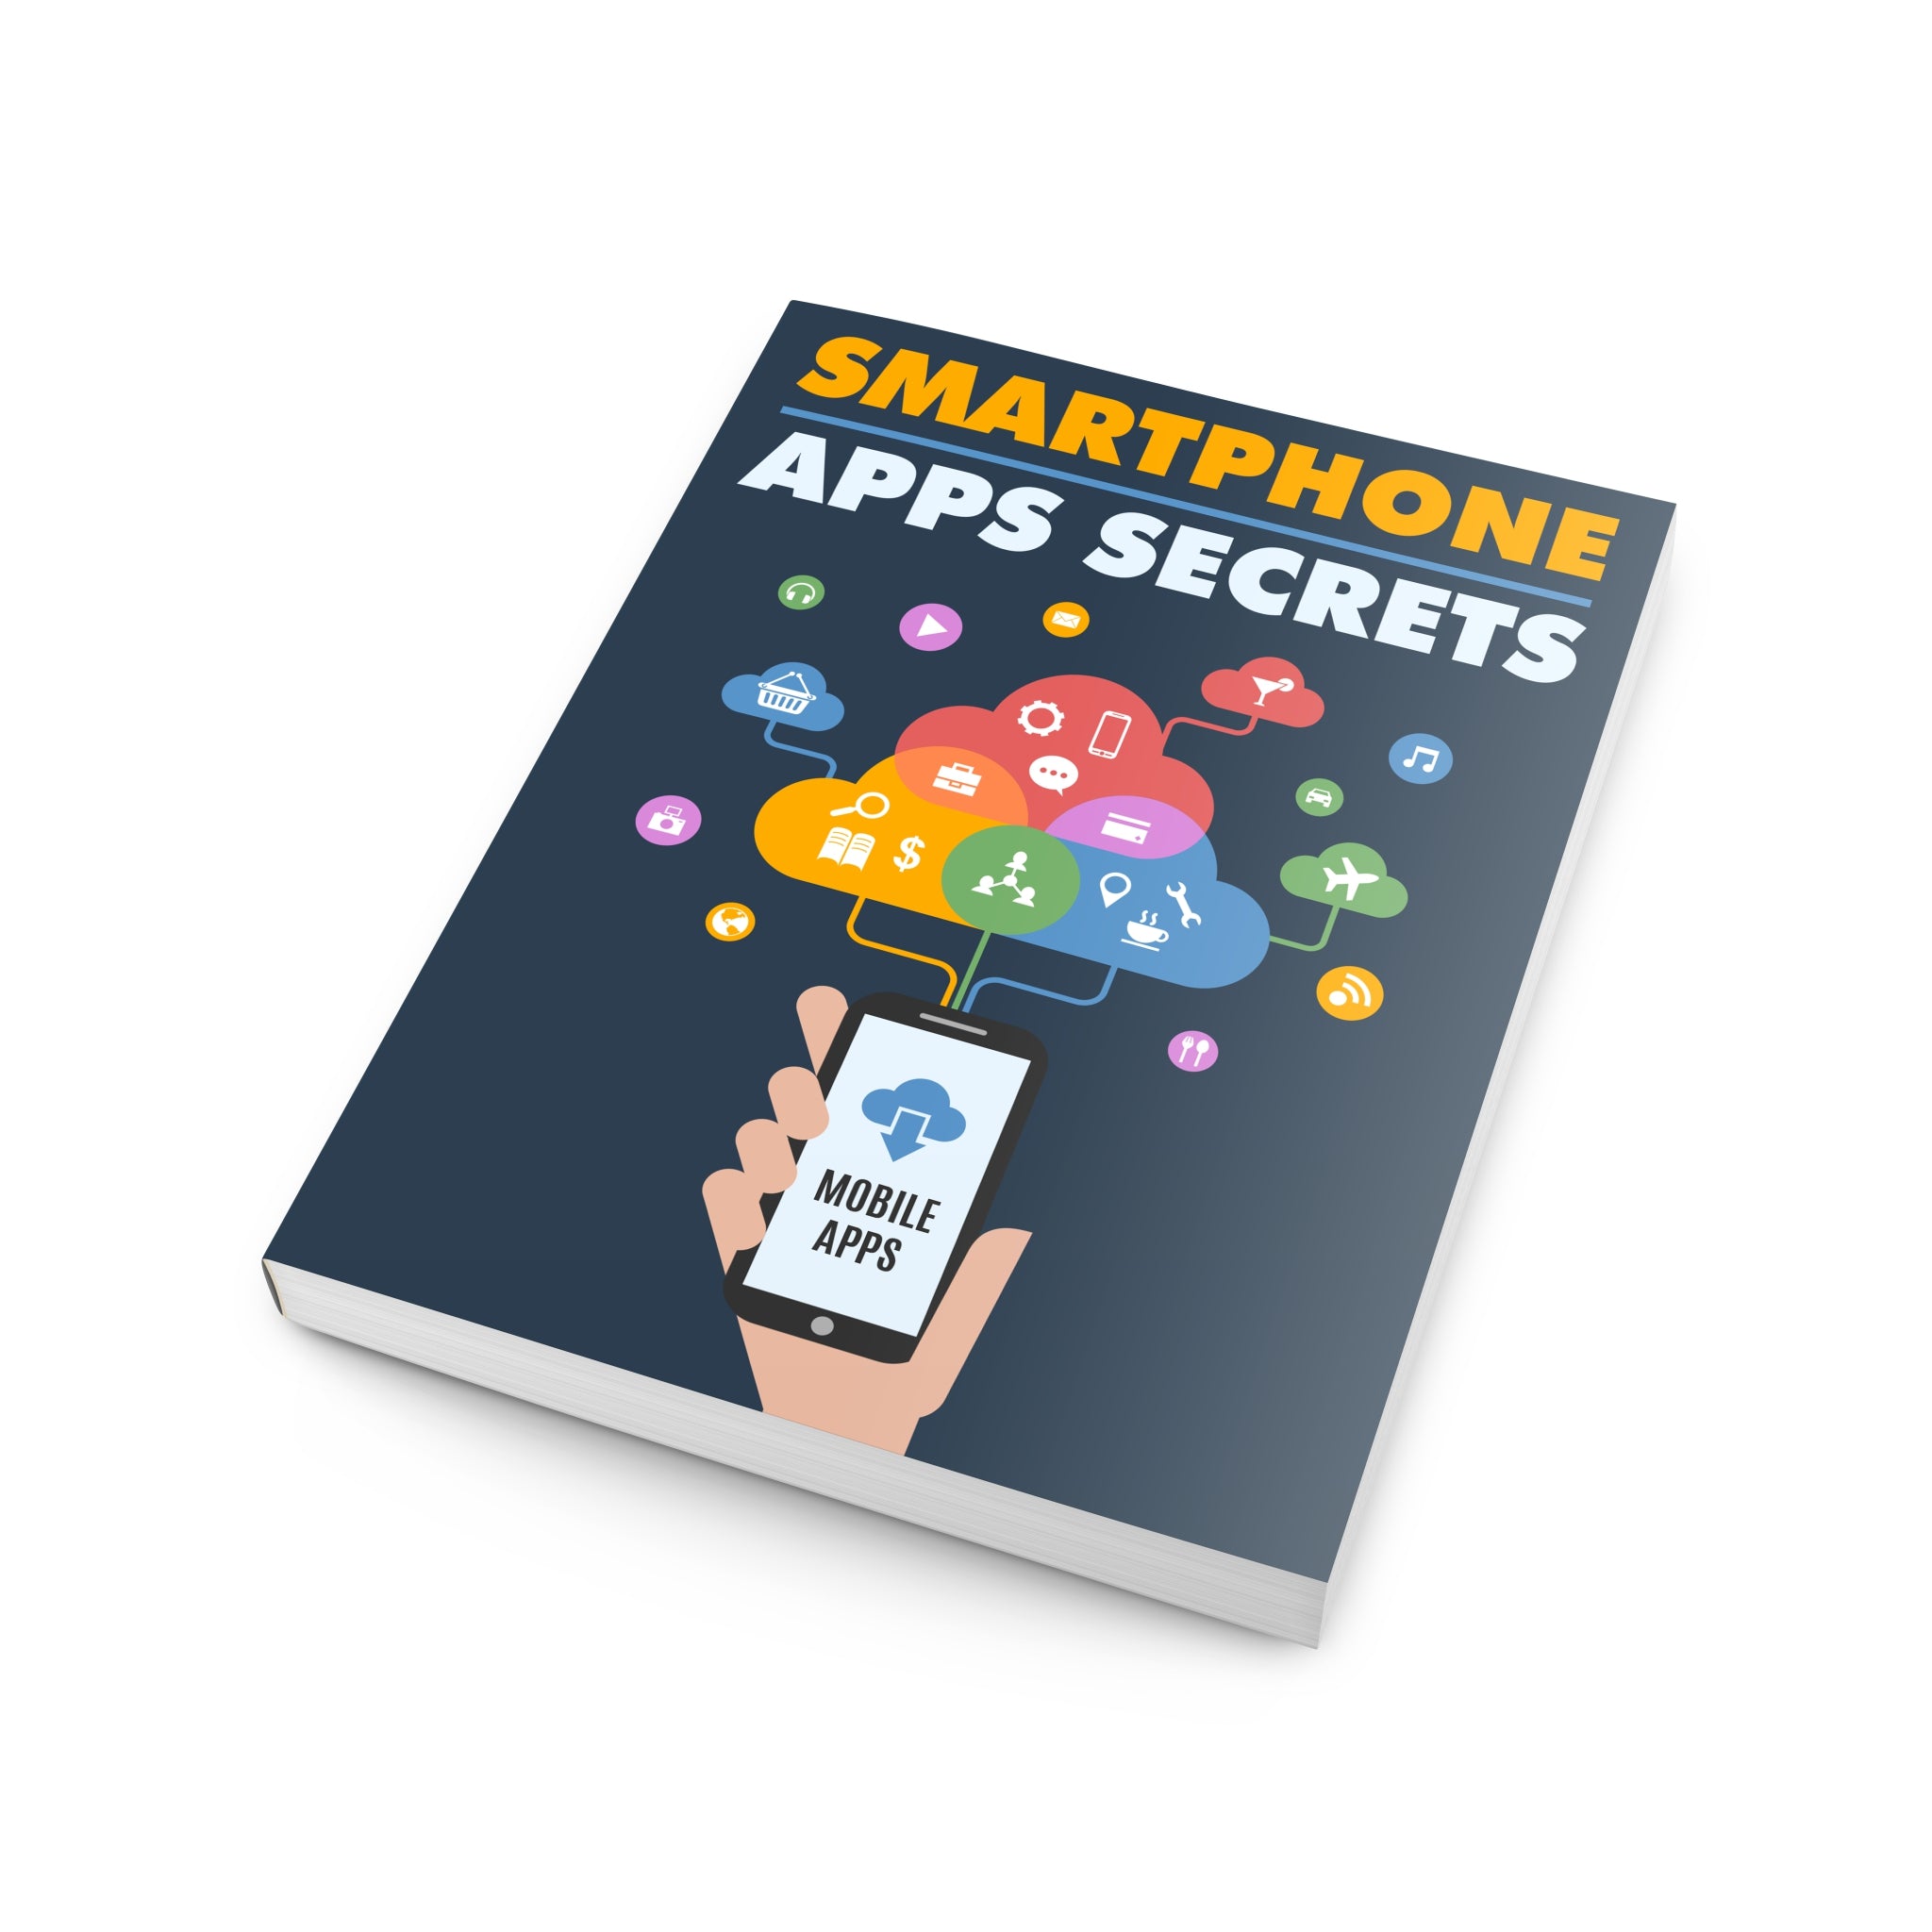 Smartphone Apps Secrets Ebook